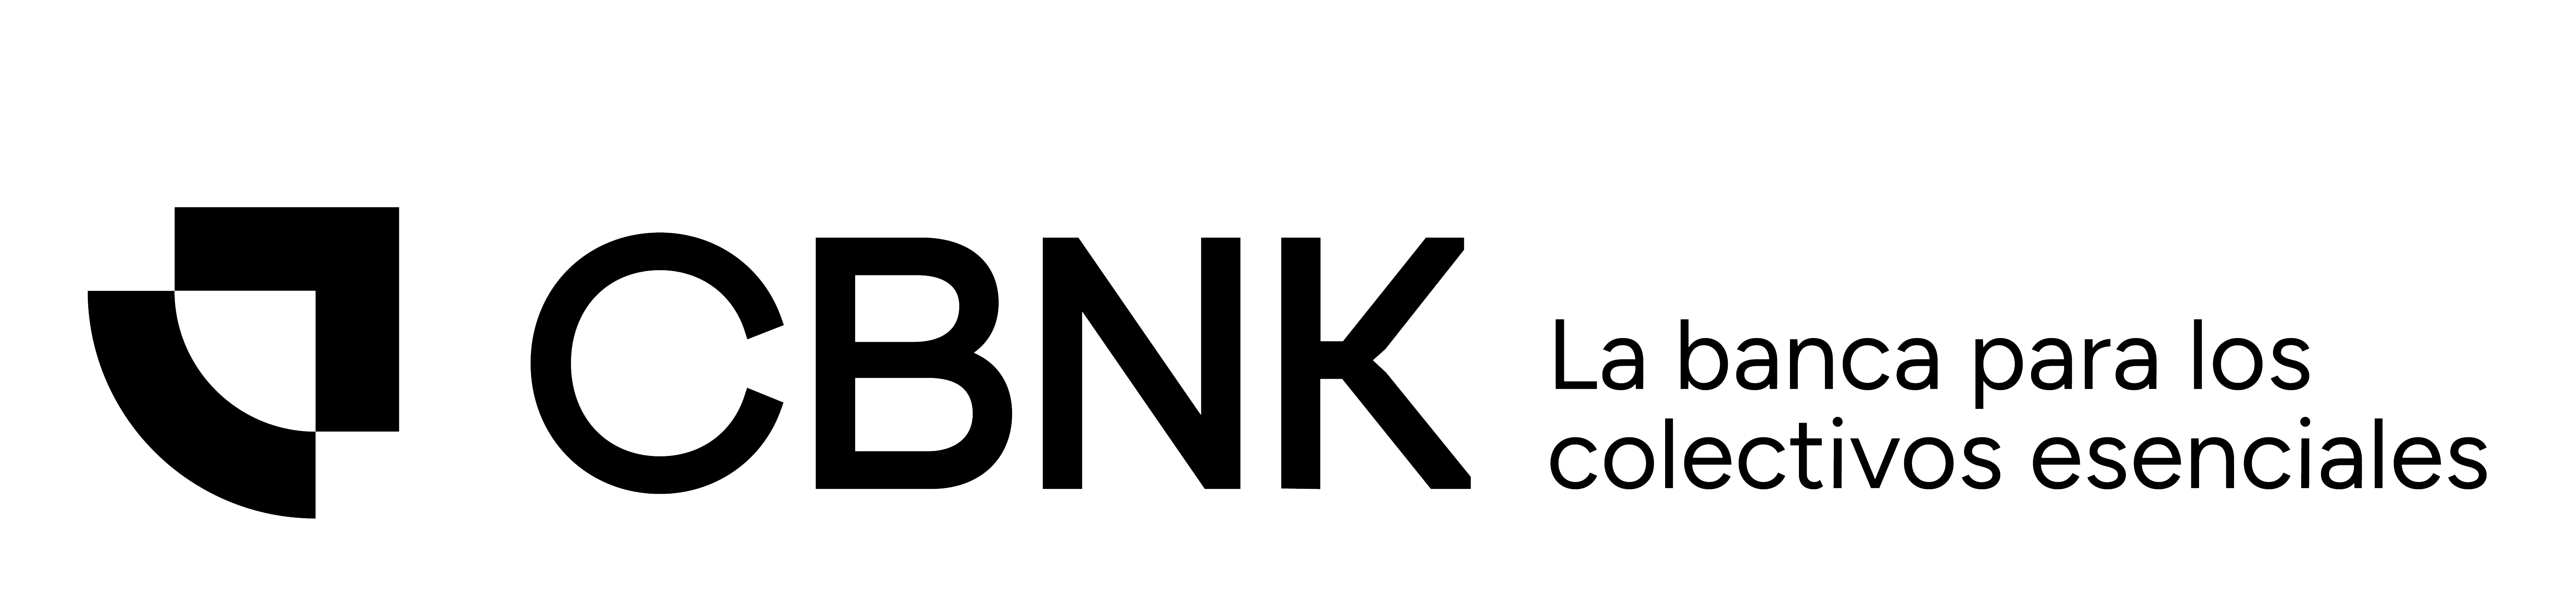 Logotipo_CBNK_final